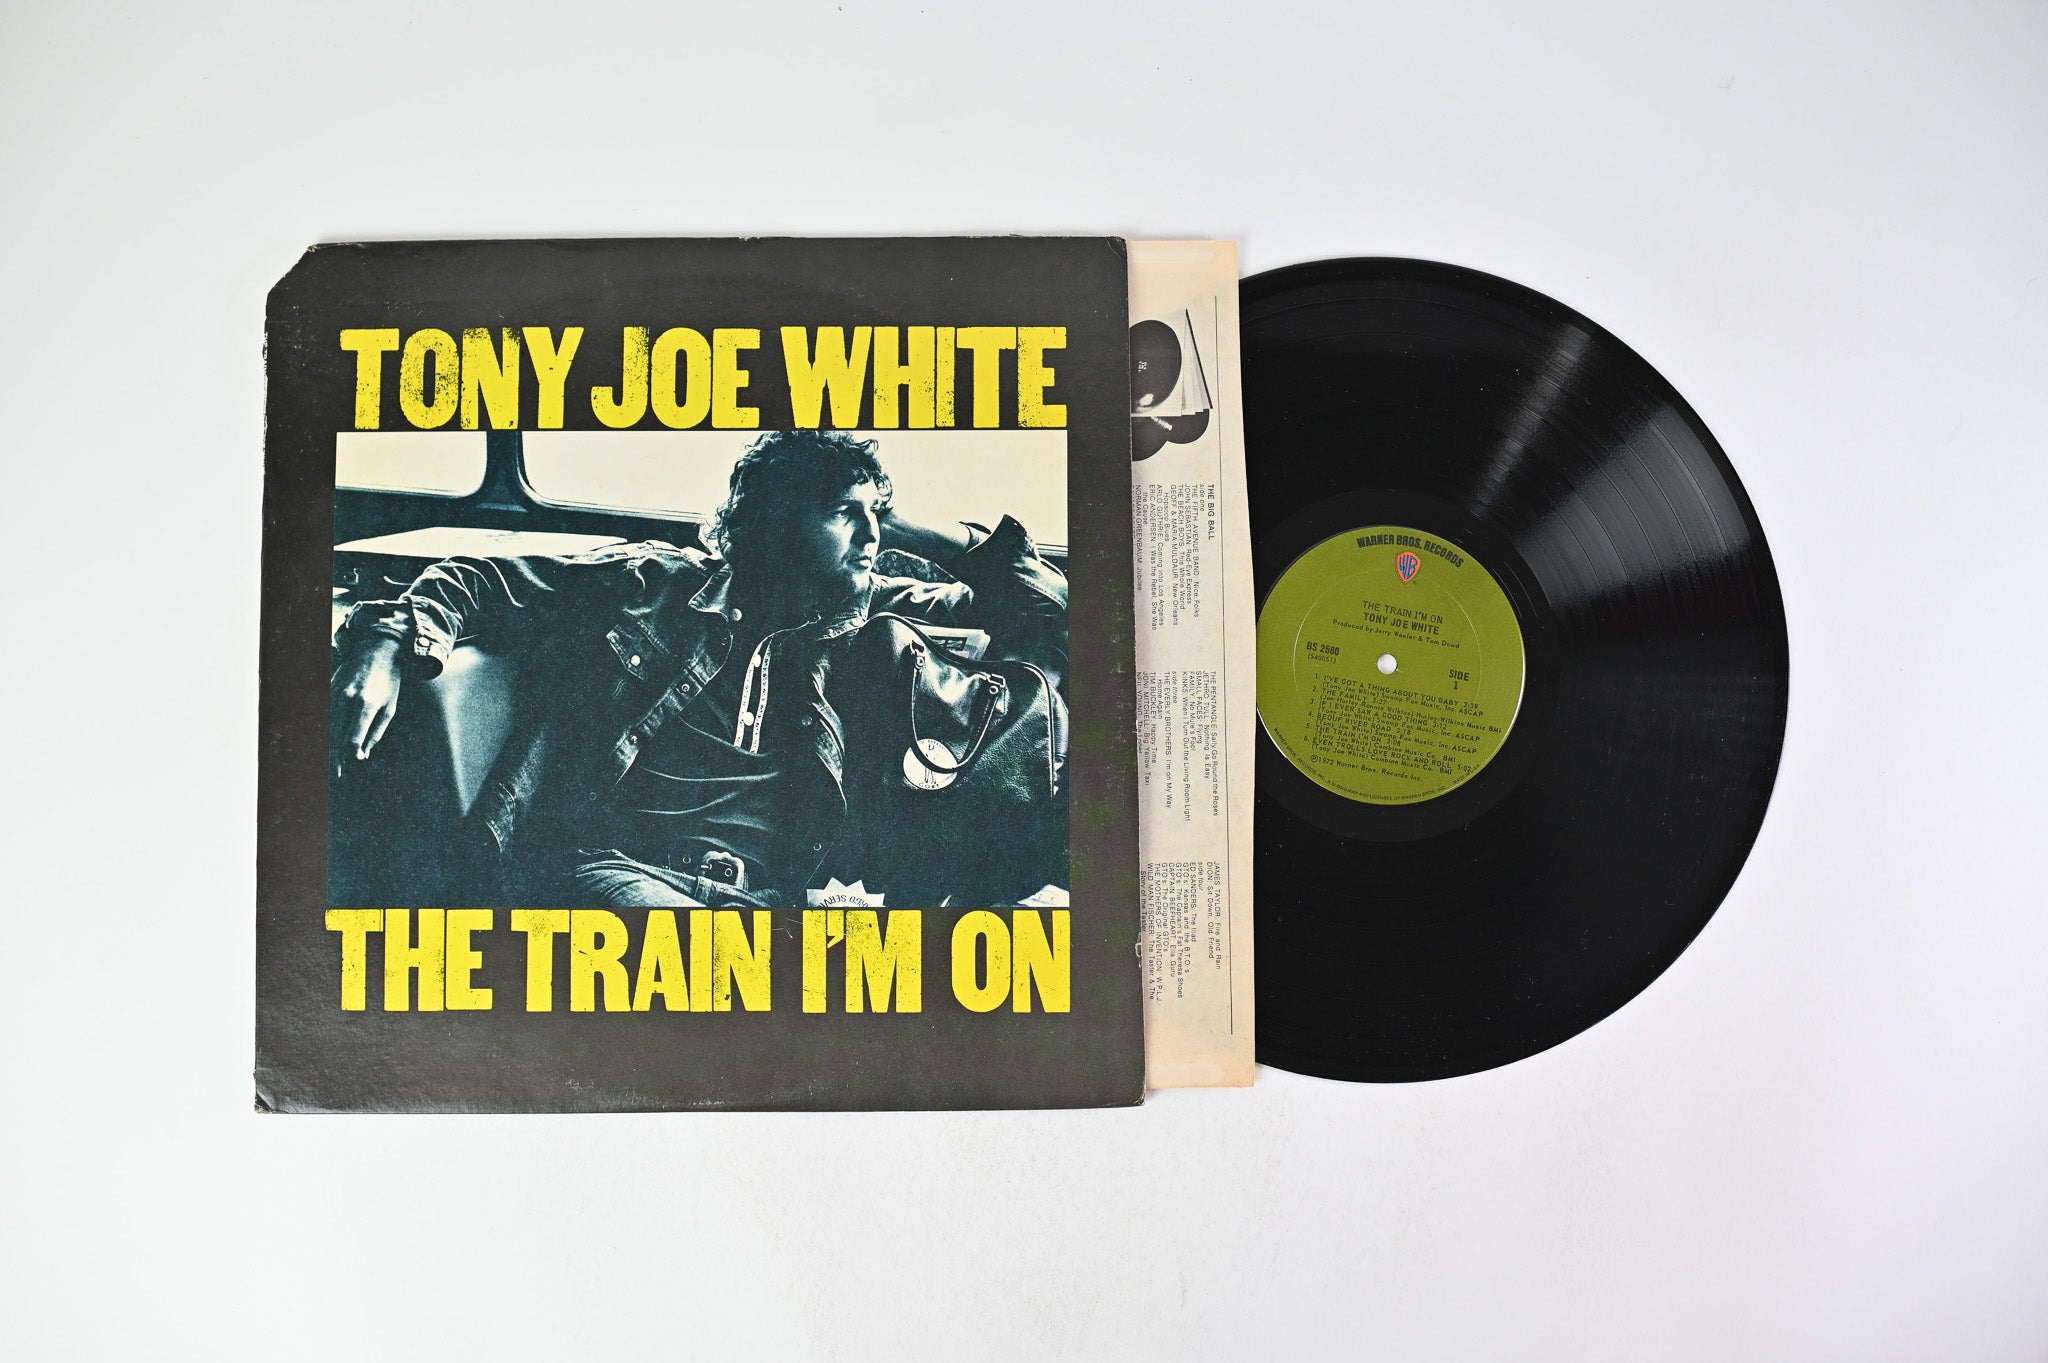 Tony Joe White - The Train I'm On on Warner Bros